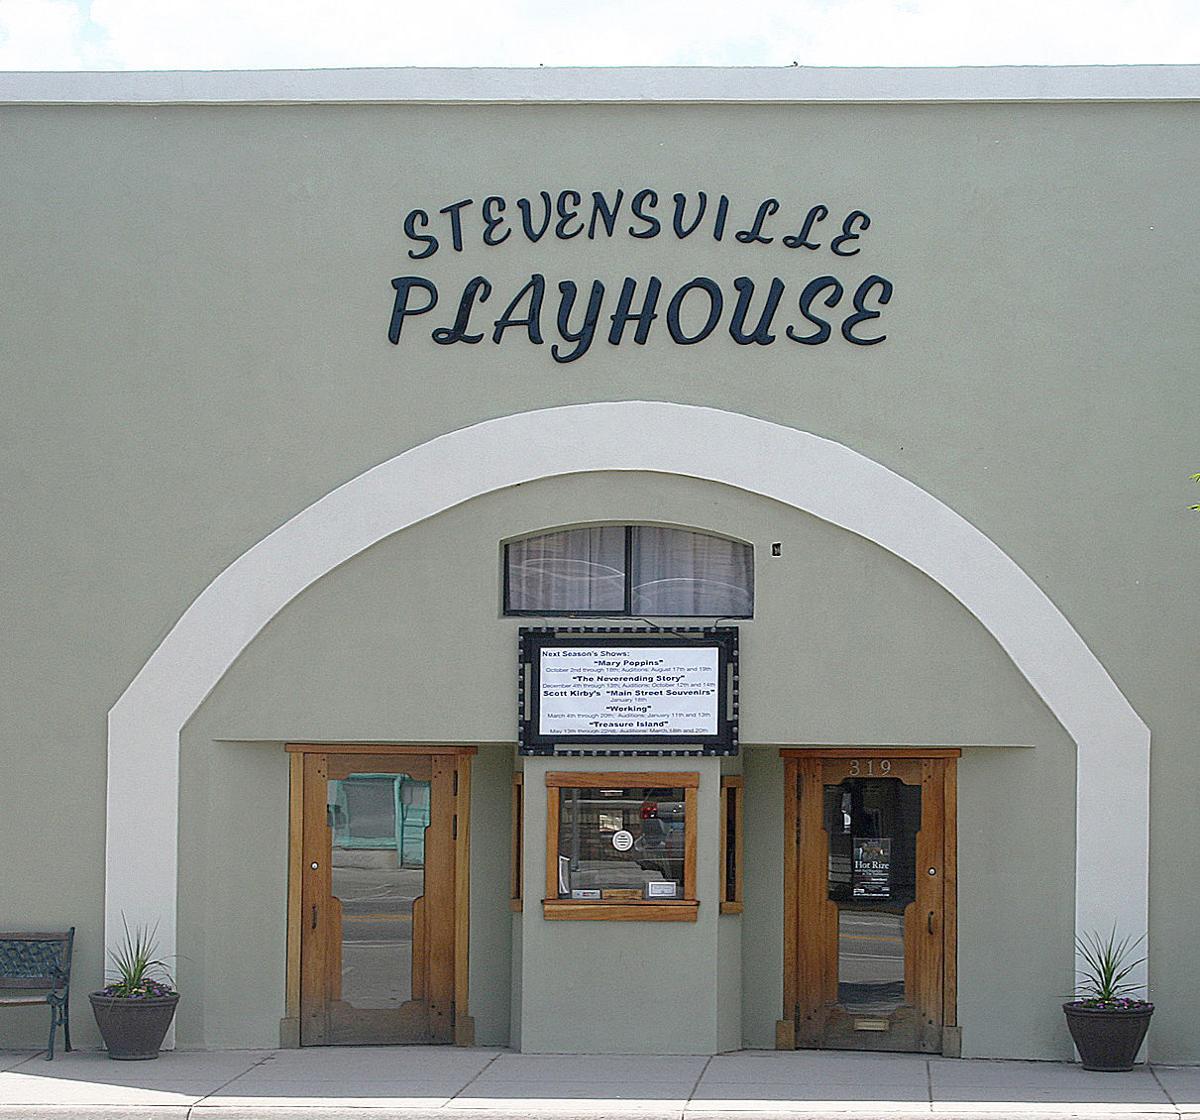 Stevensville Playhouse is producing On Golden Pond starting Dec. 3